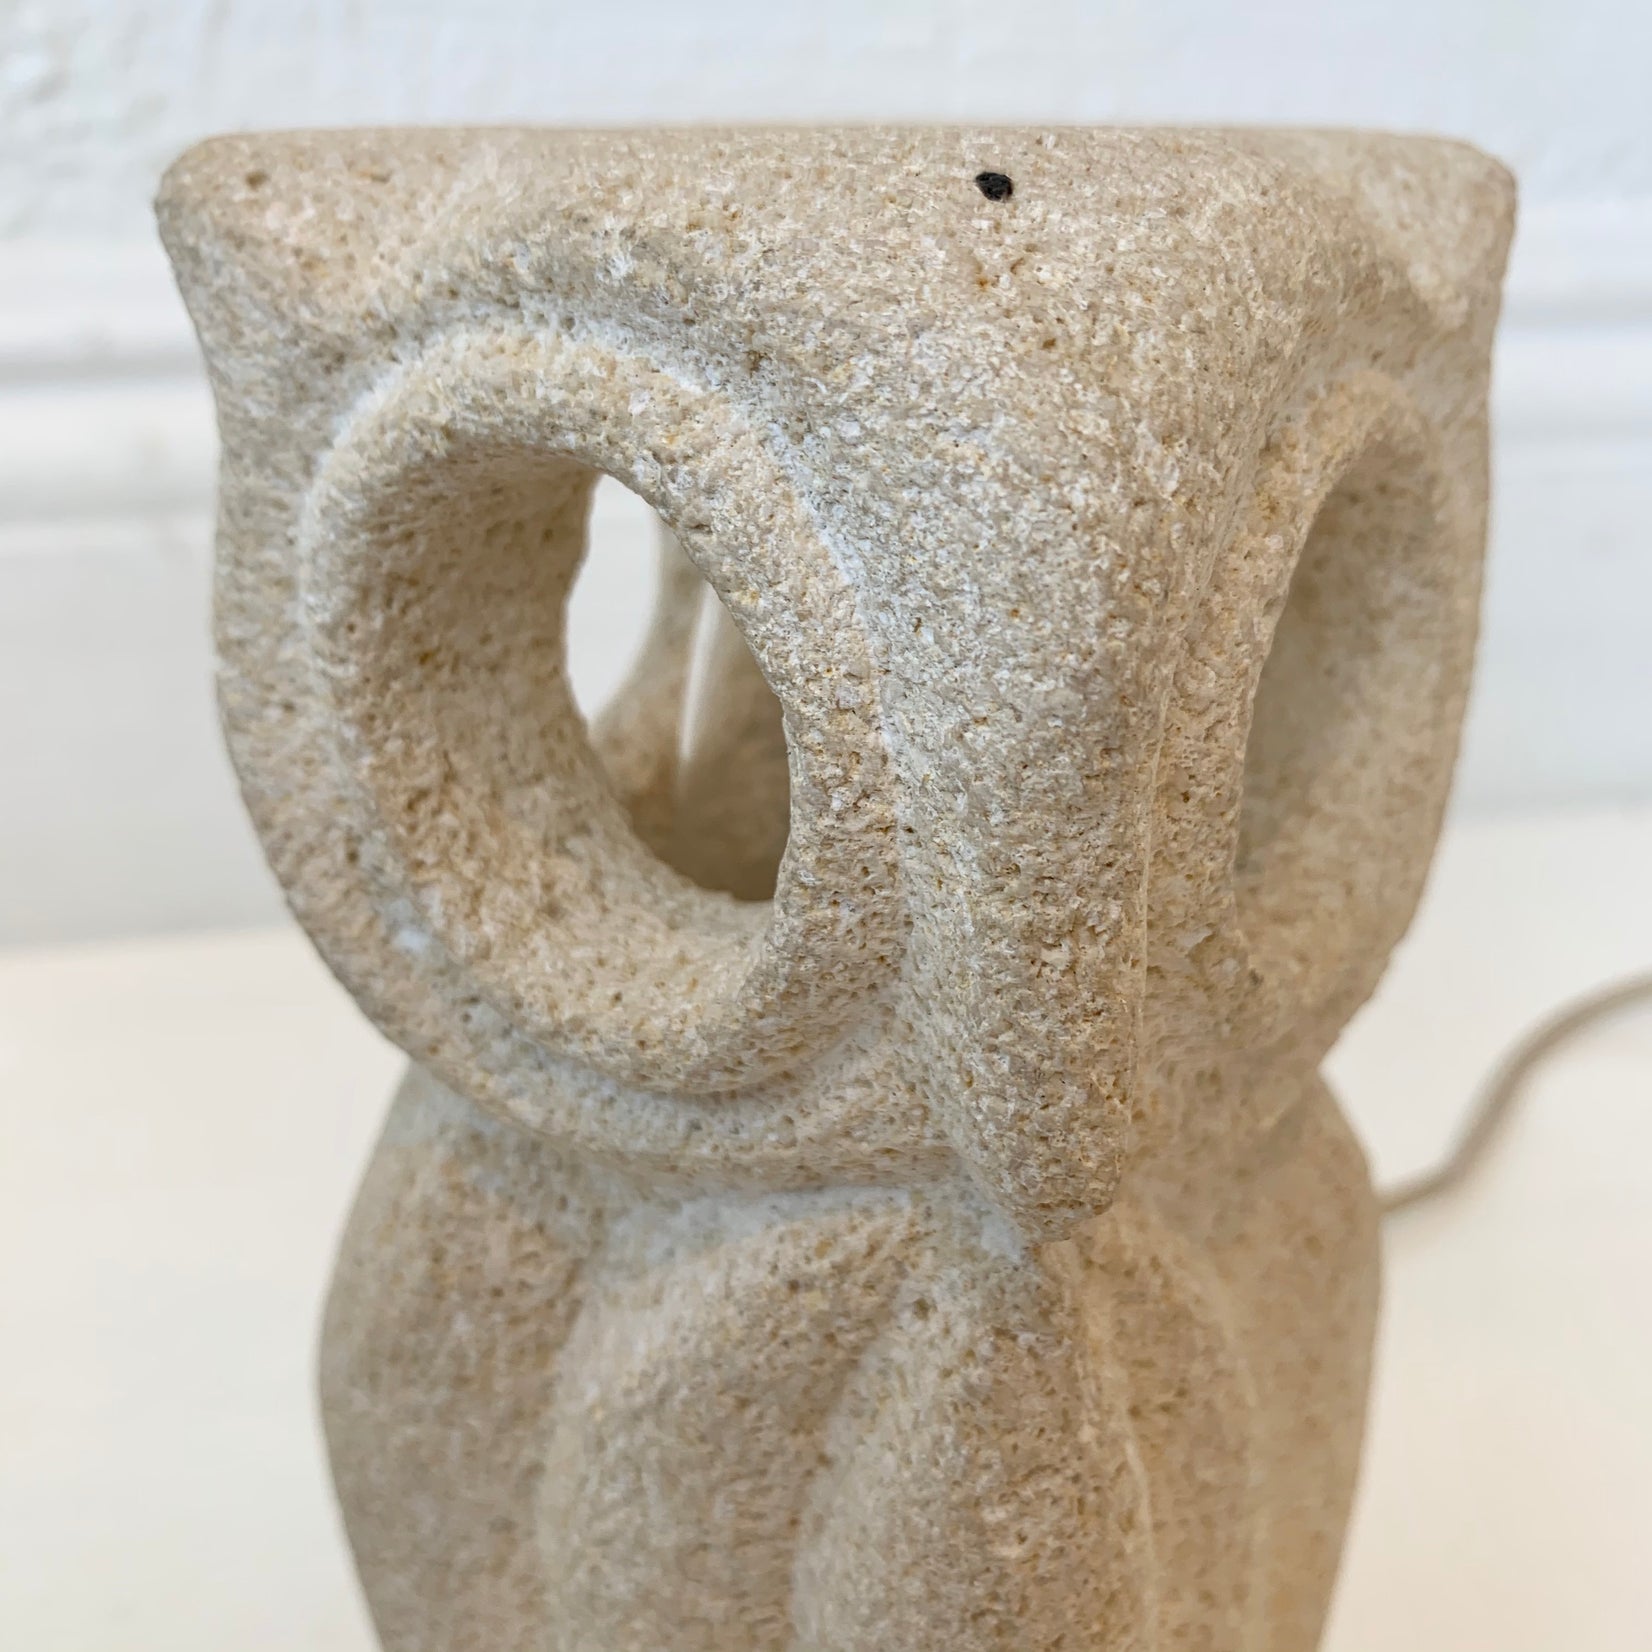 Albert Tormos Stone Owl Lamp